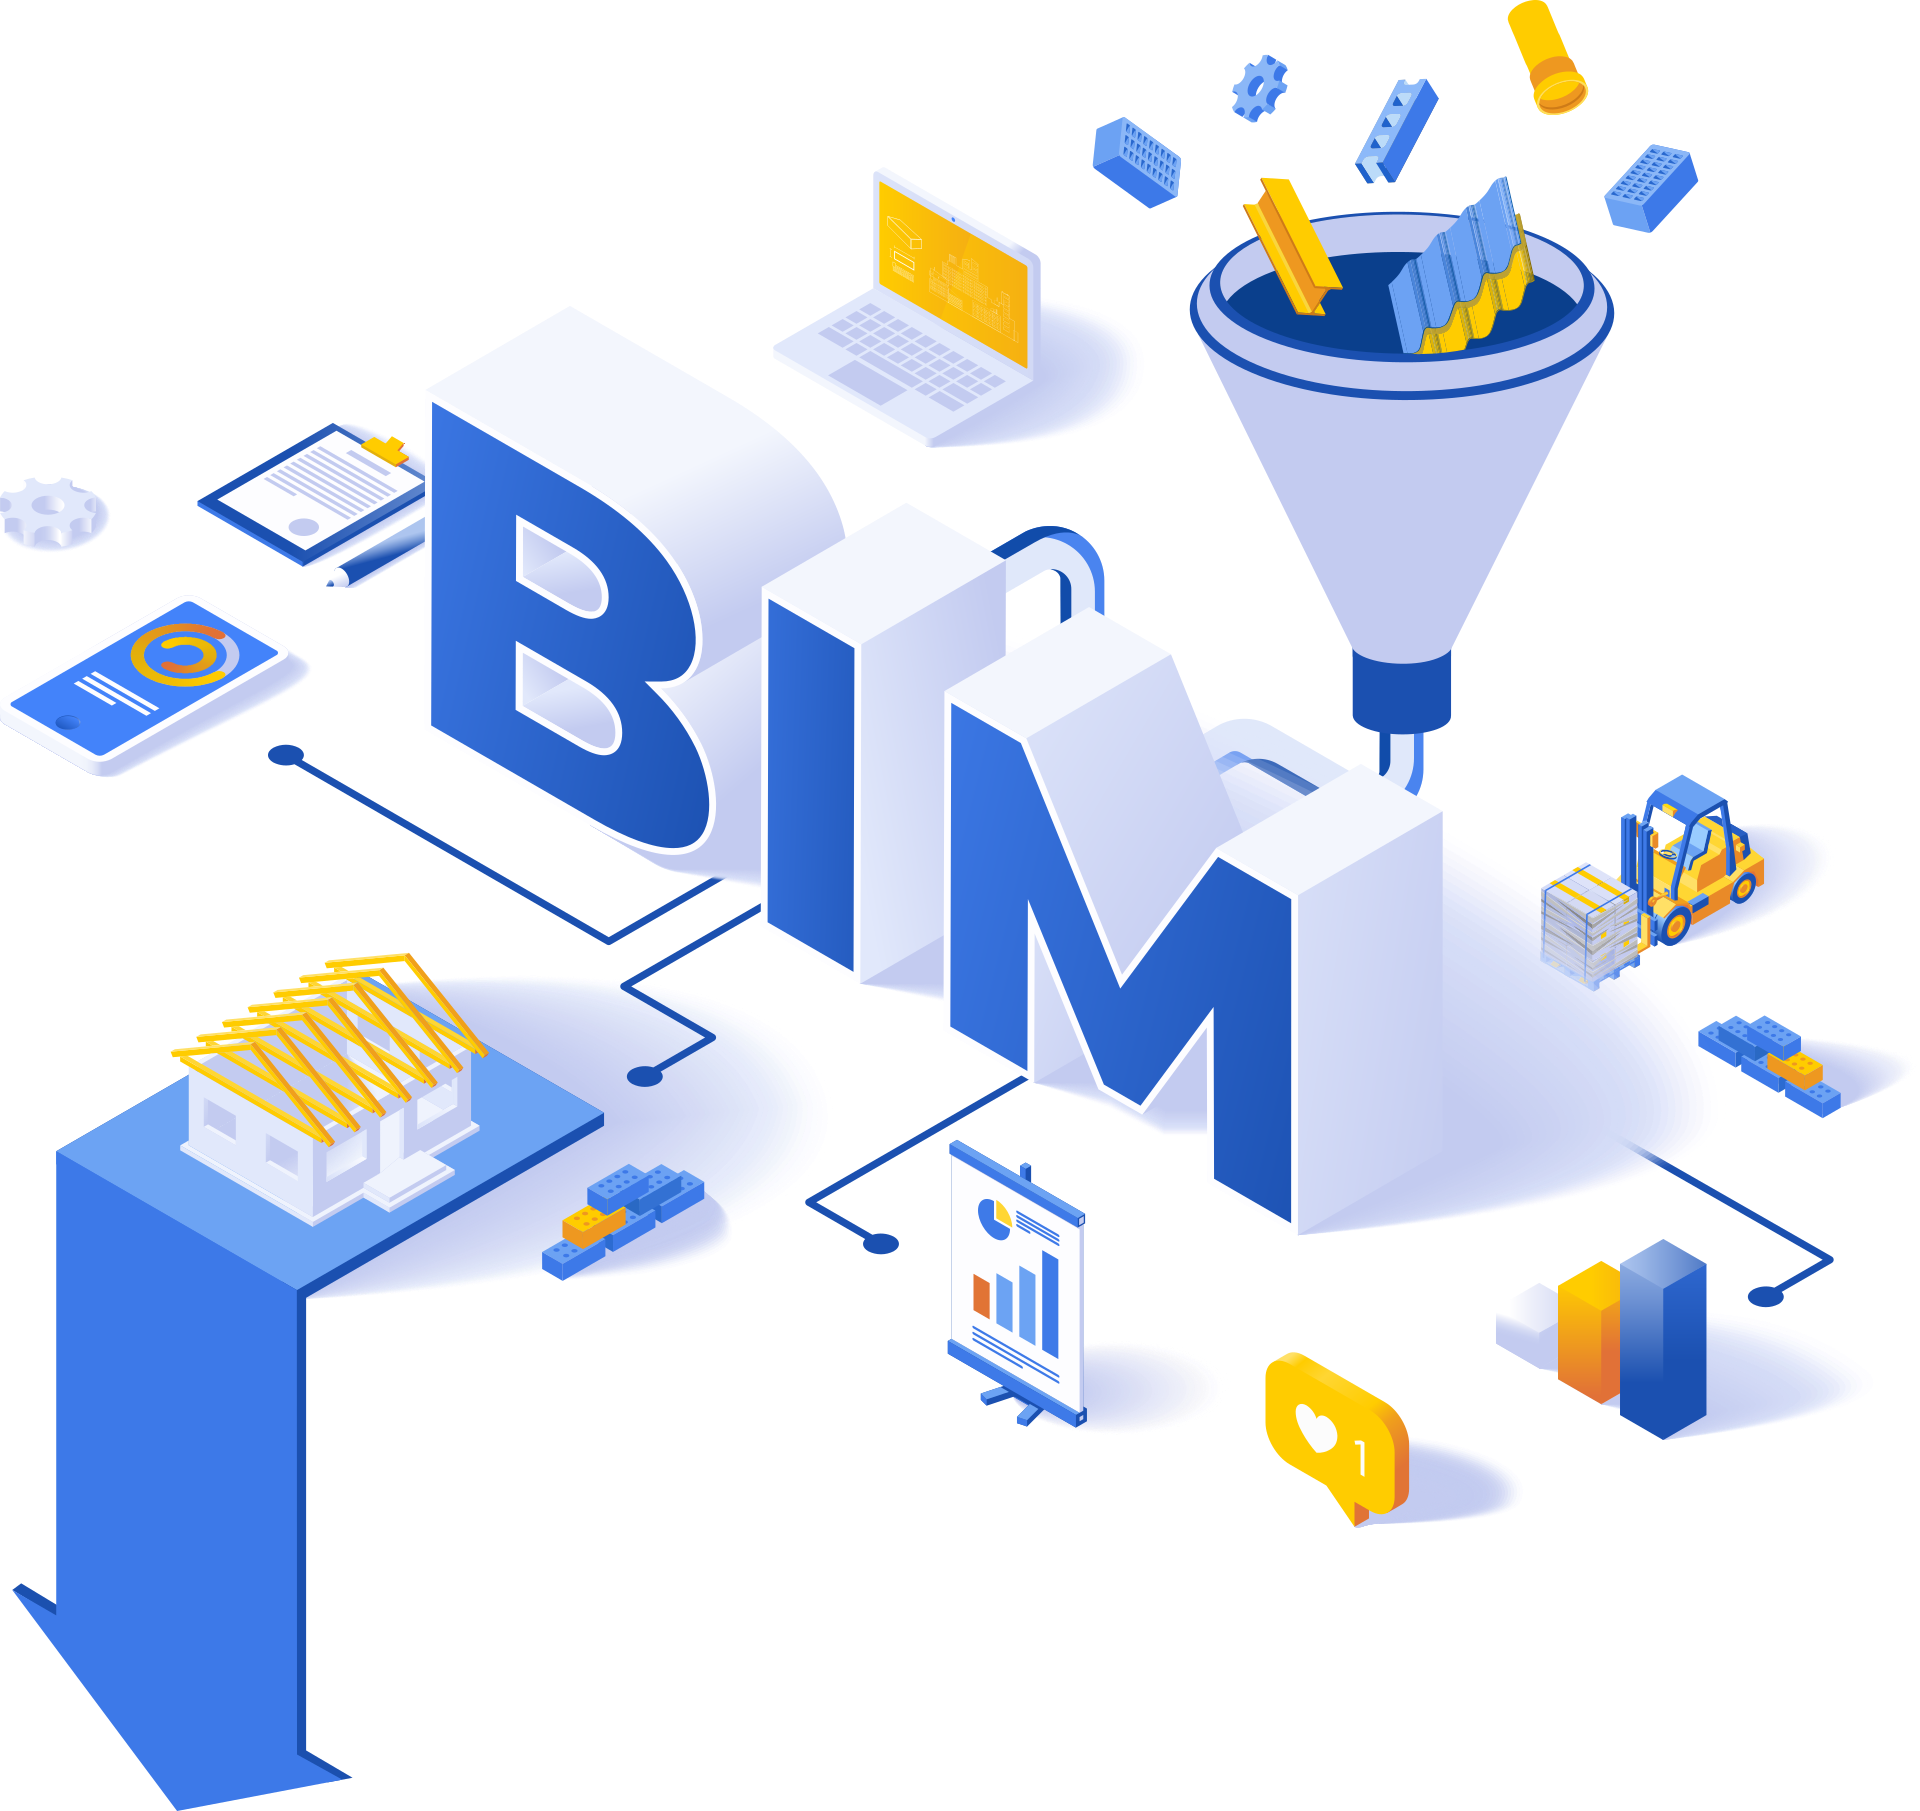  BIM a wizualizacja 3D